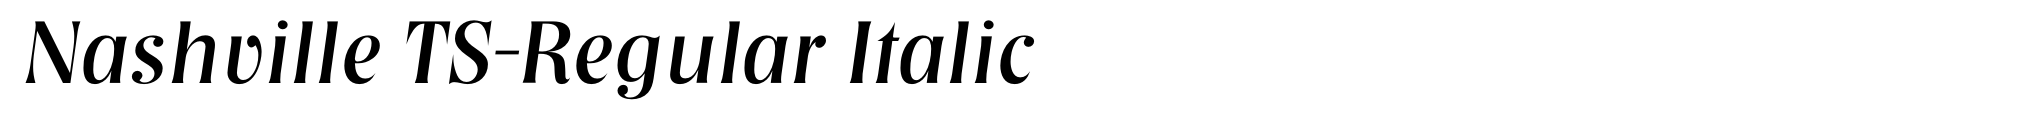 Nashville TS-Regular Italic image